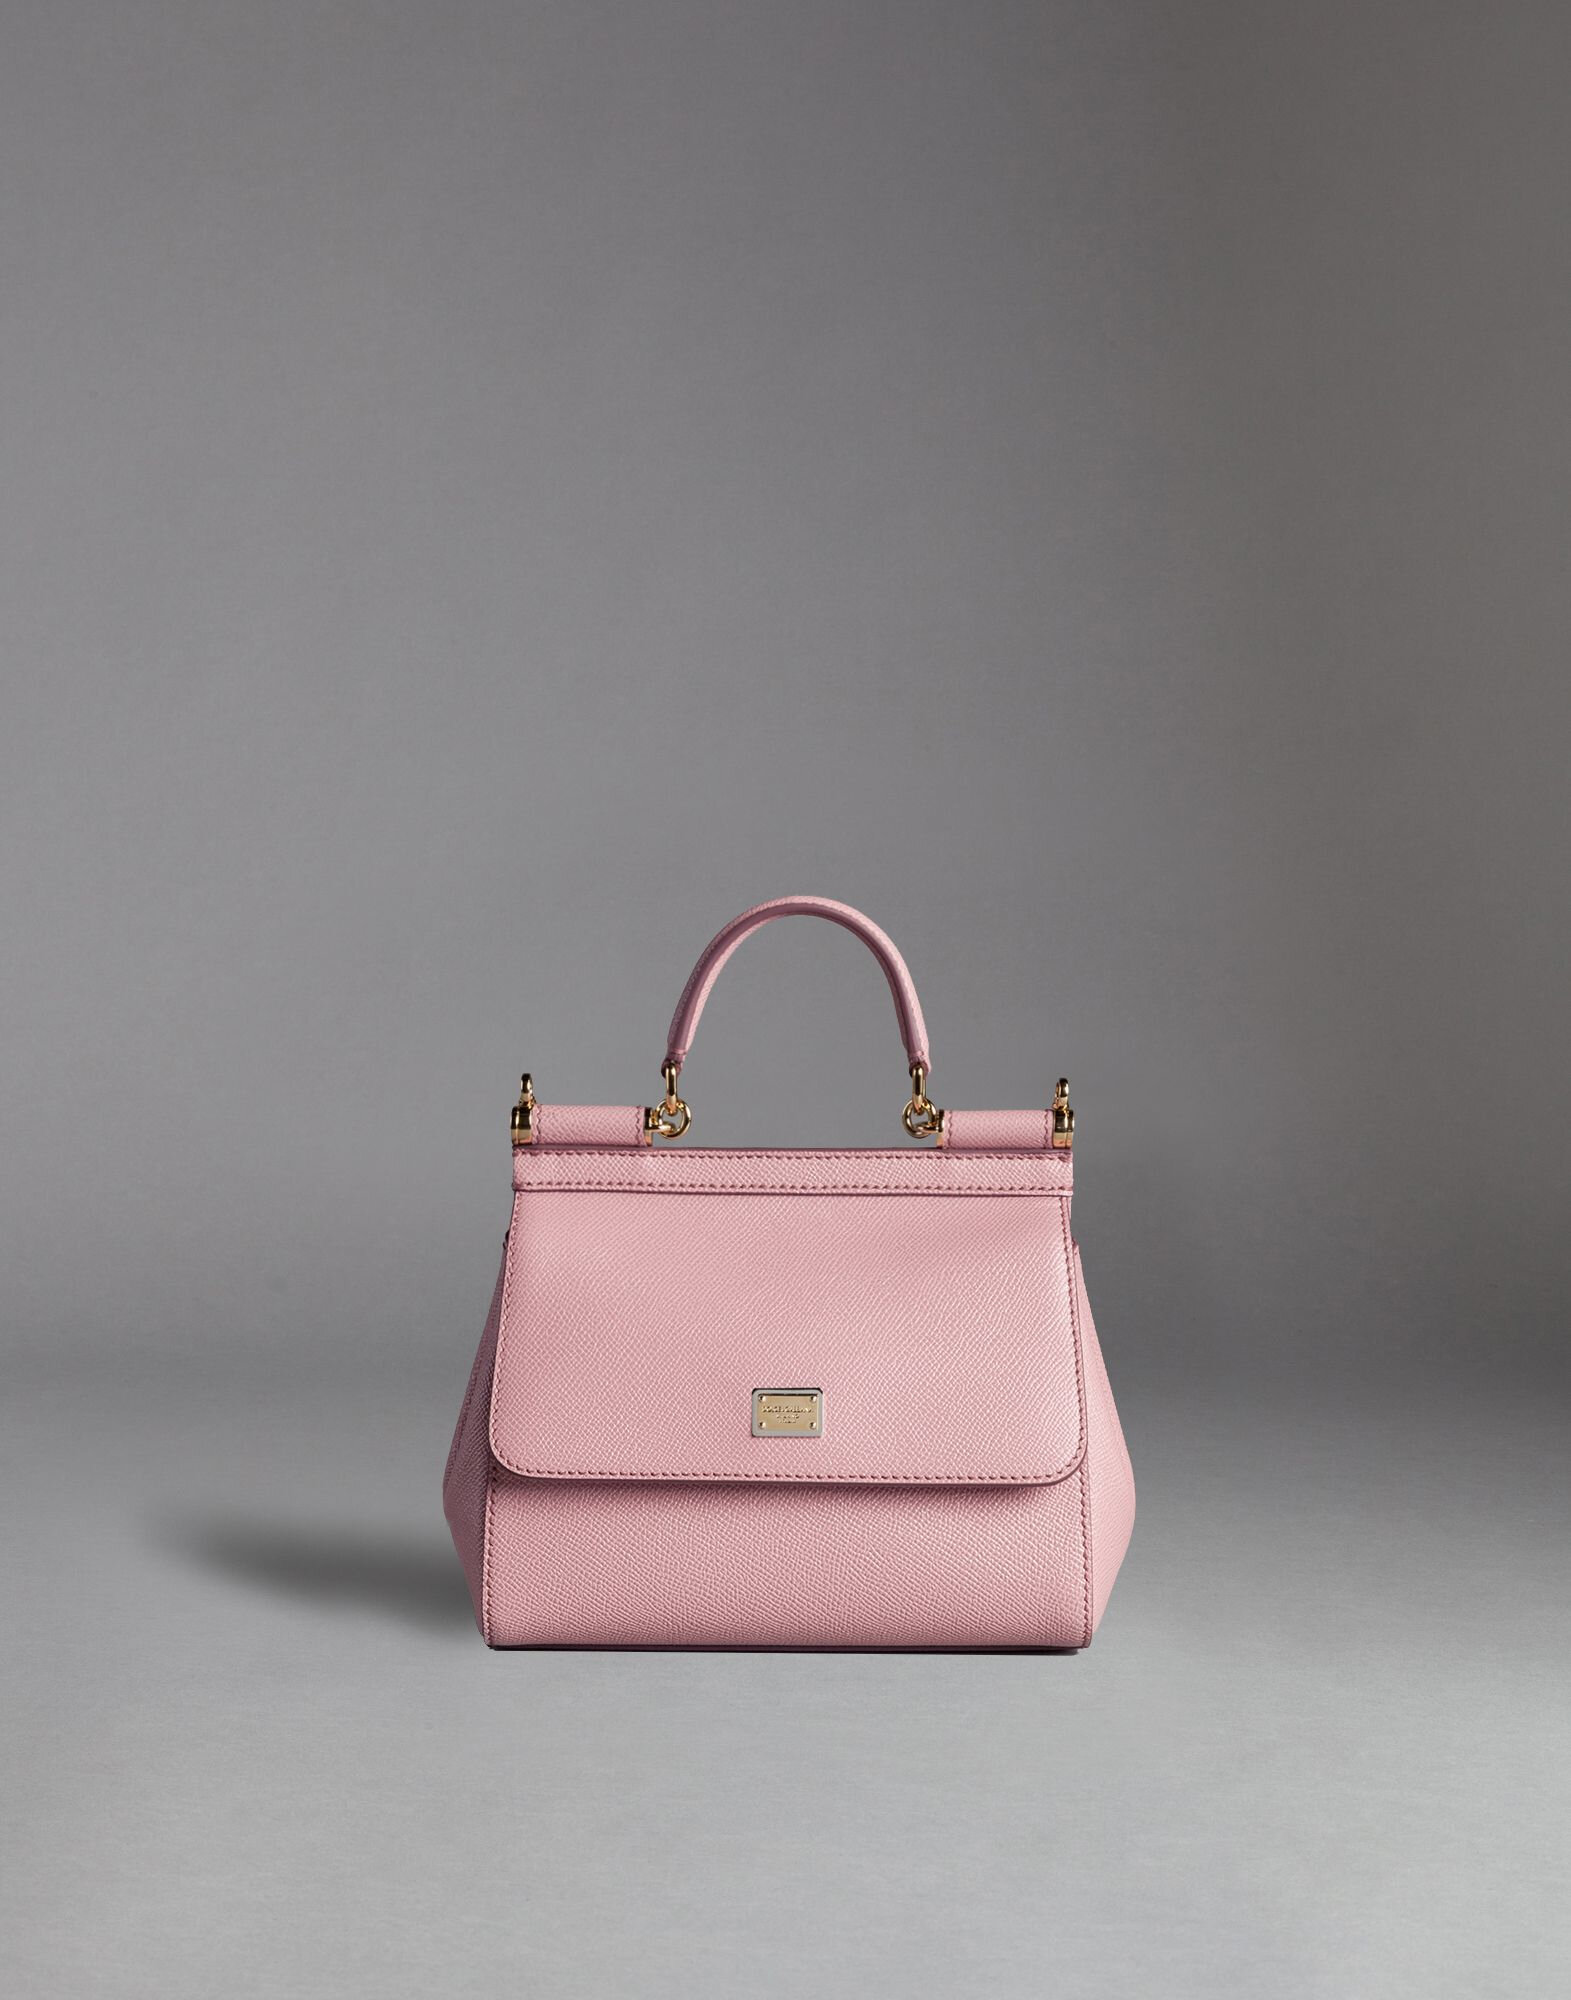 Dolce & Gabbana Mini Sicily Bag in Pink Dauphine Calfskin Leather.jpg